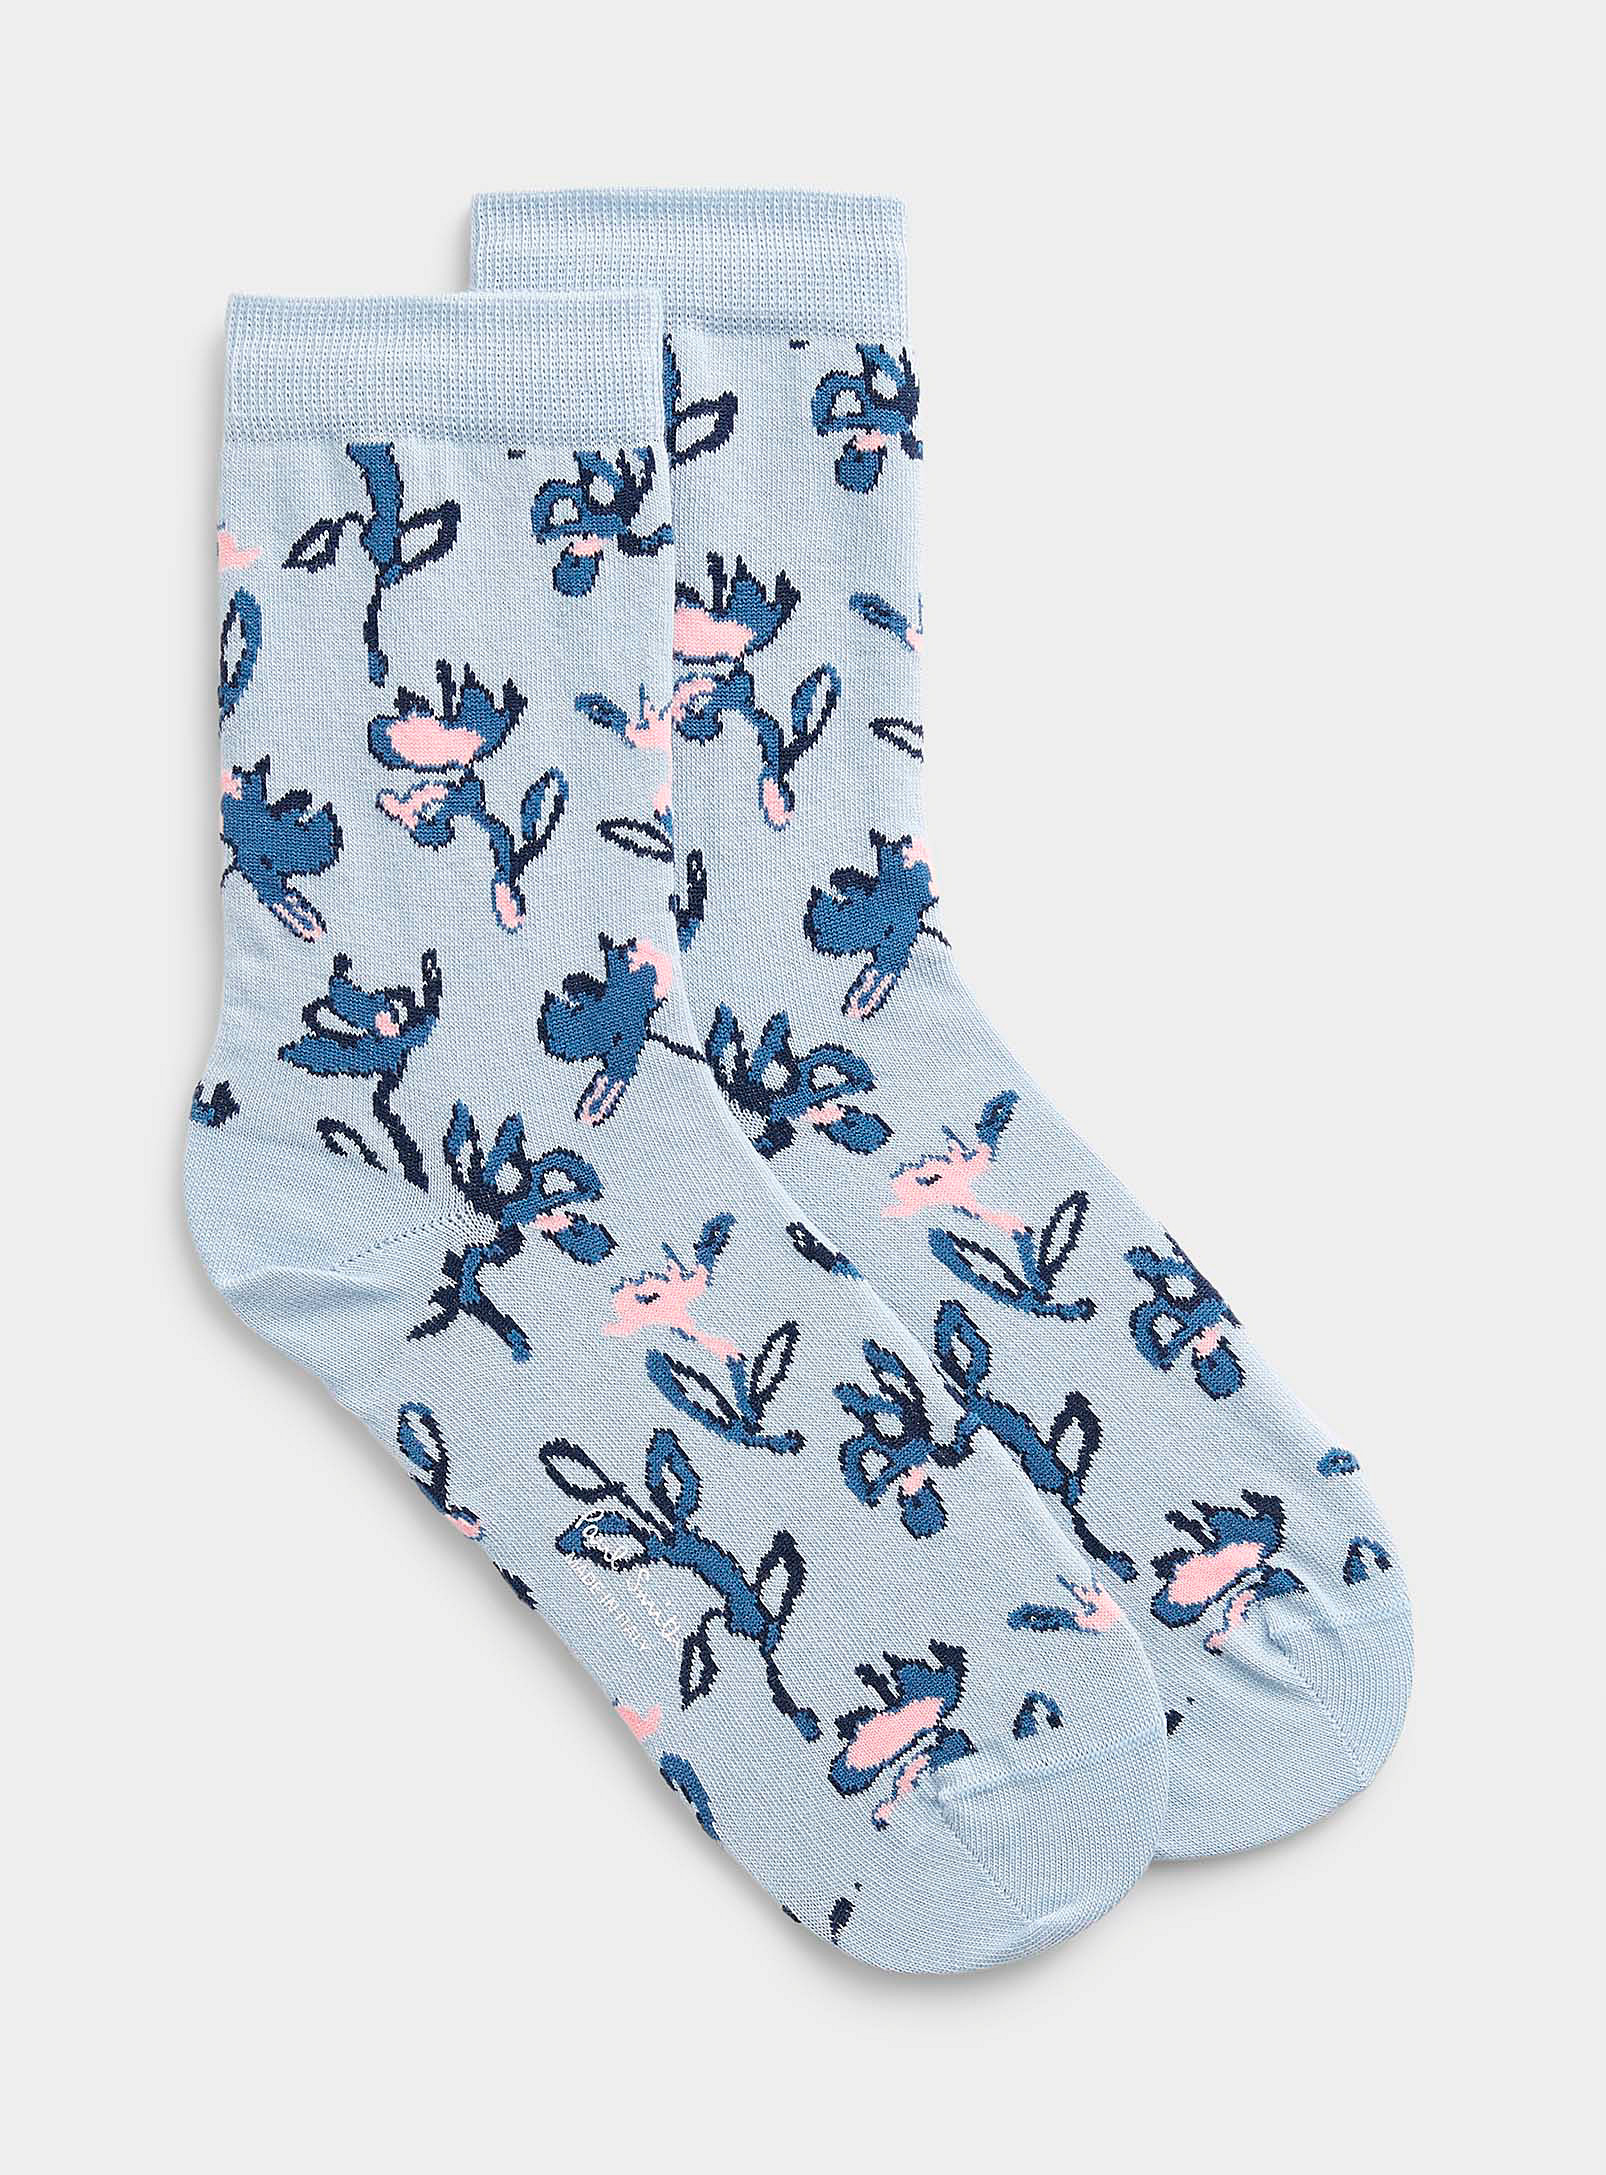 Paul Smith - Women's Bluish floral sock